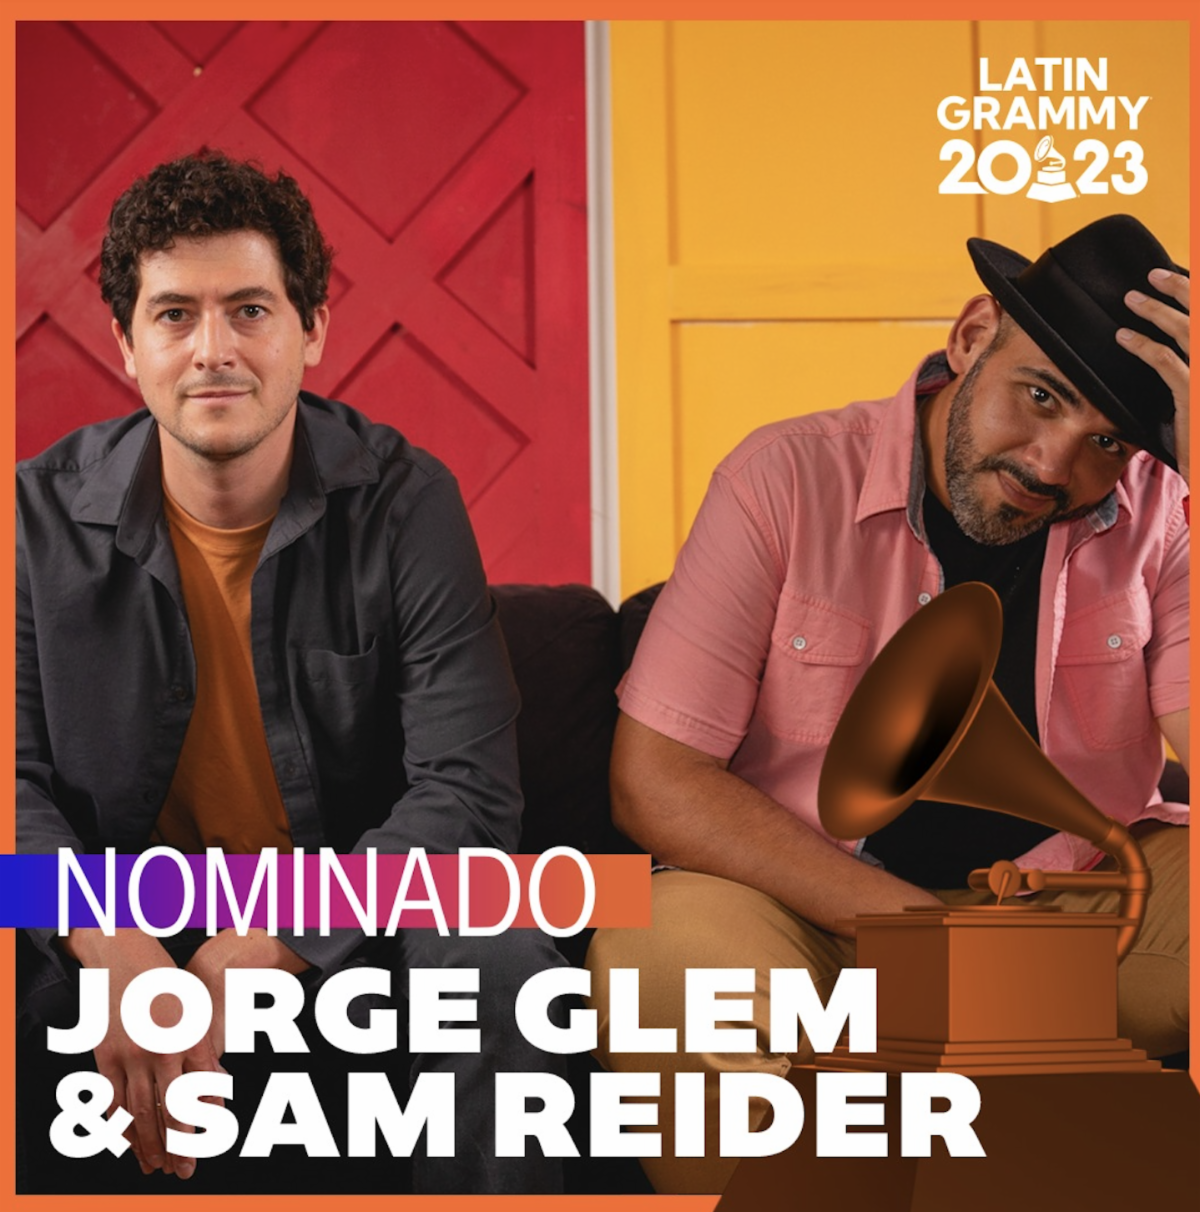 JORGE GLEM y SAM REIDER celebran nominación al Latin Grammy’s 2023